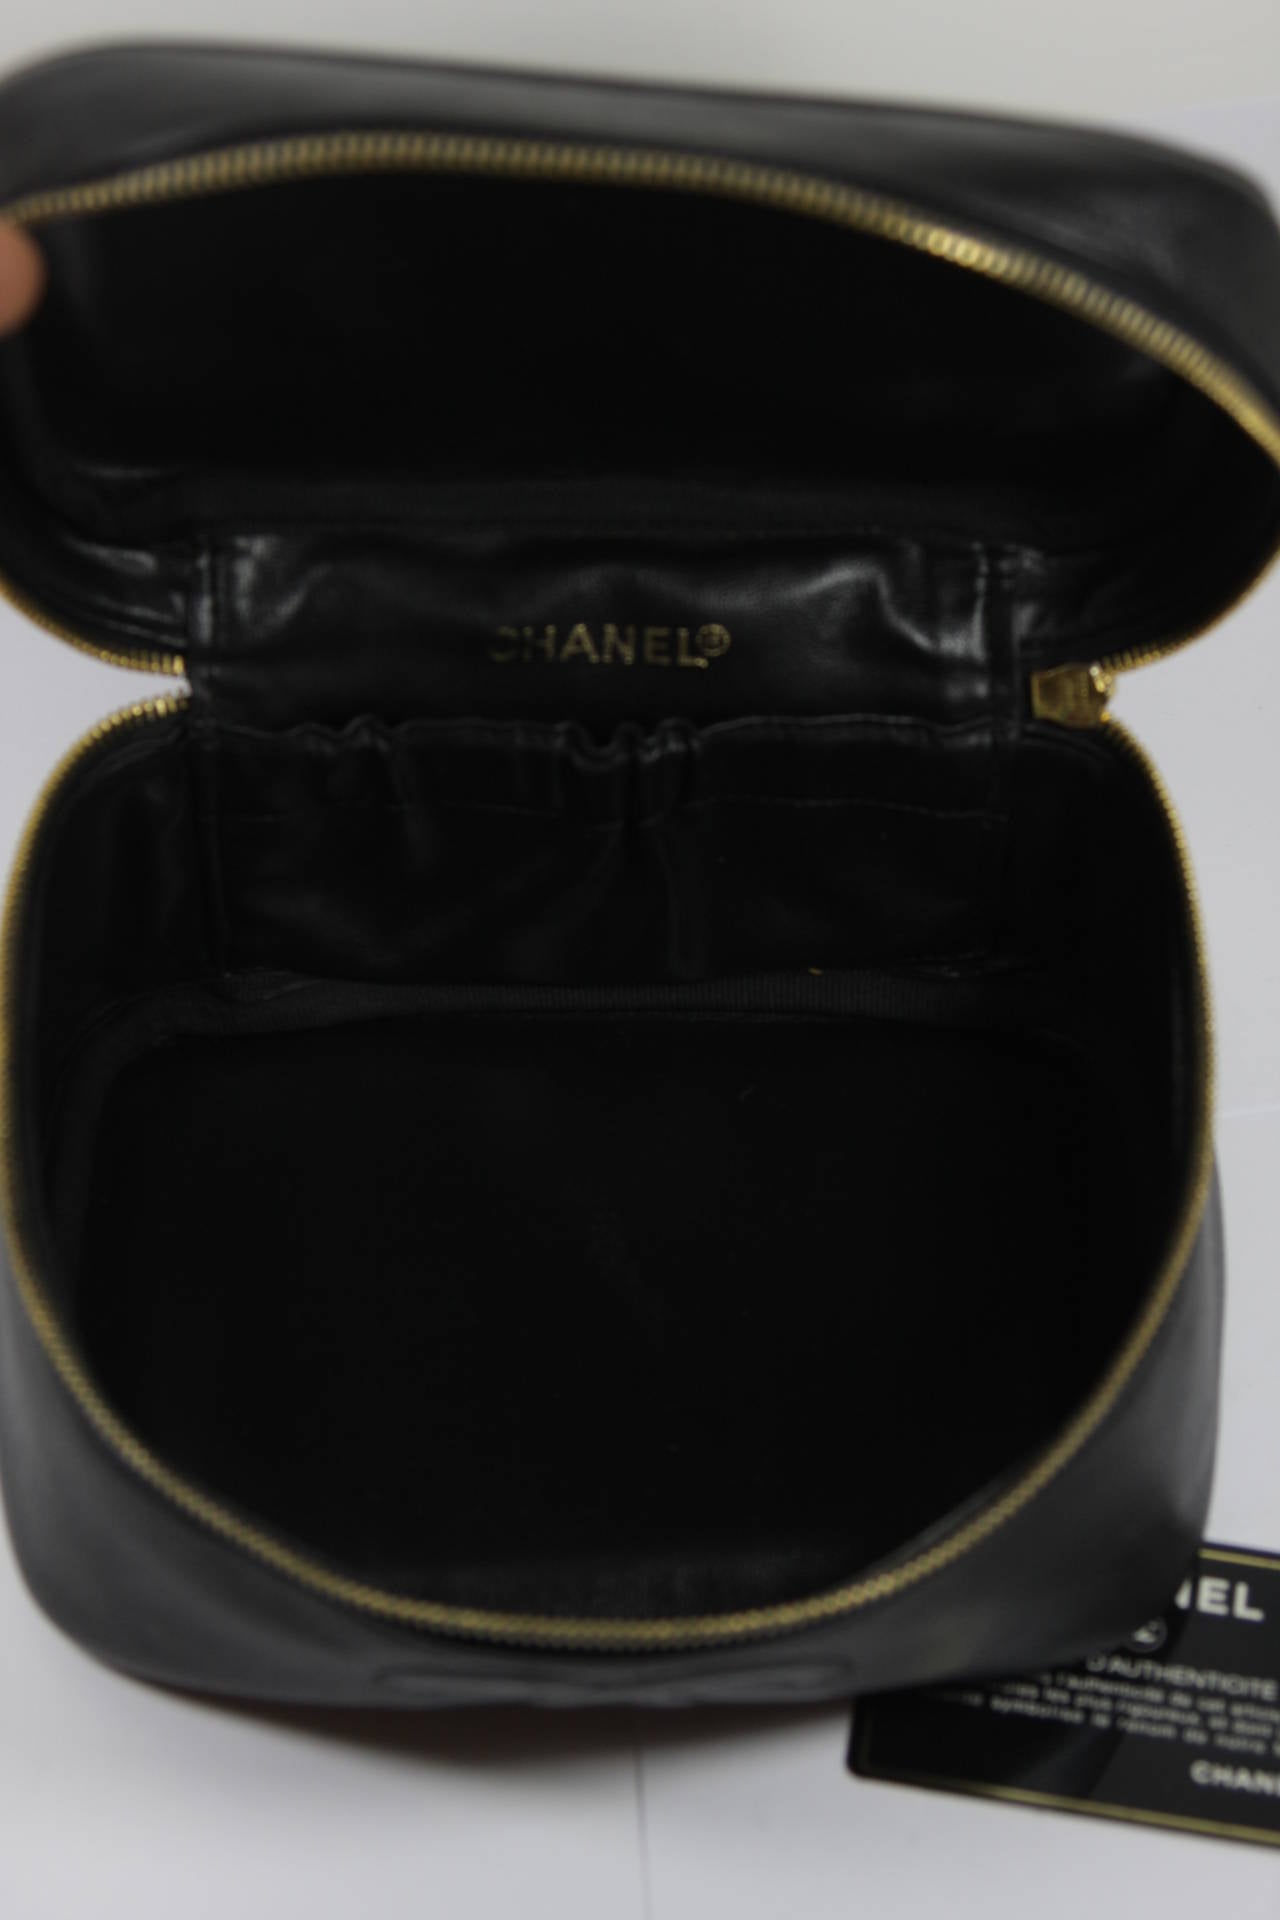 Chanel Black Caviar Make Up Case 5